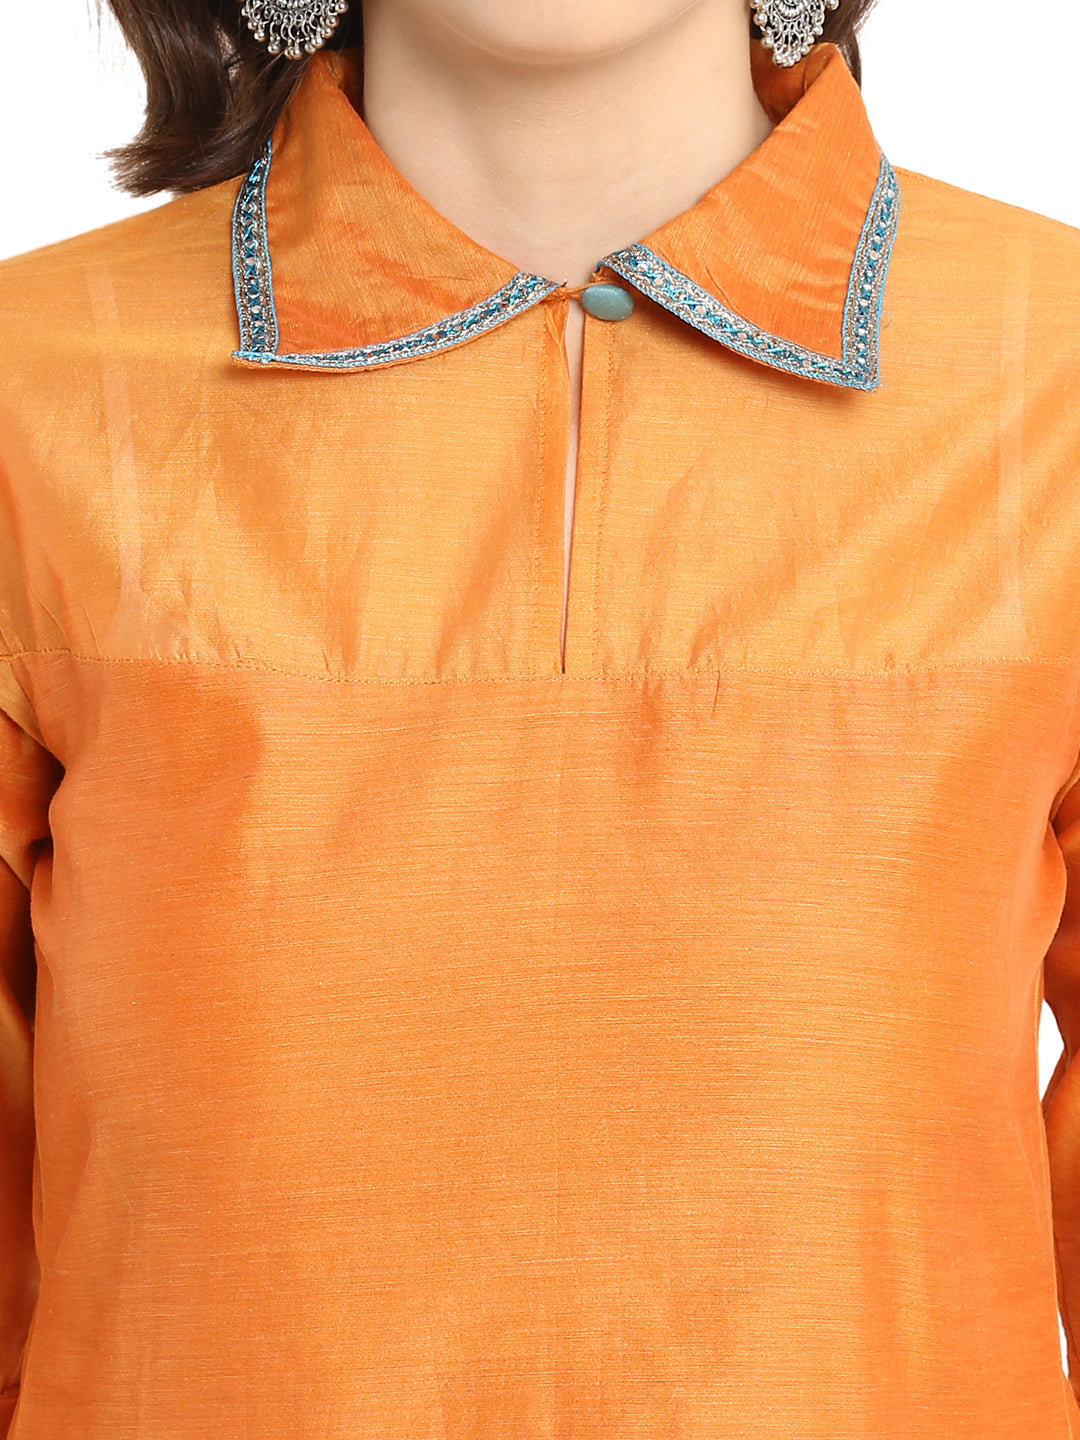 Buy HINNWAR Indian Kurti with Latest Brocade Raw Silk Neck Design Shirt  Collar Style Look for Women & Girls Mustard Yellow at Amazon.in